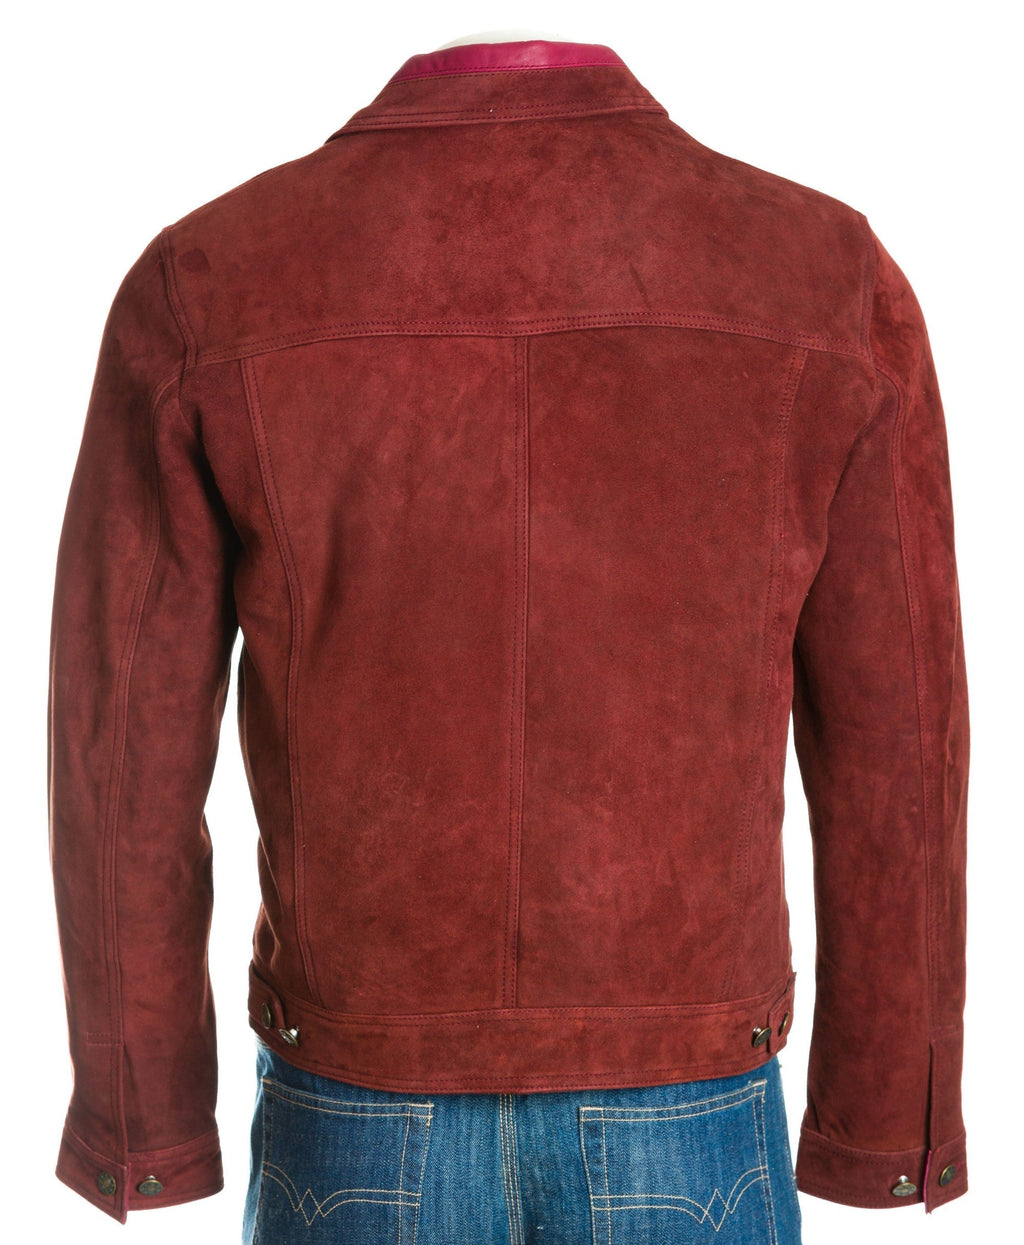 Men's Burgundy Denim Shirt Style Suede Jacket: Antonio